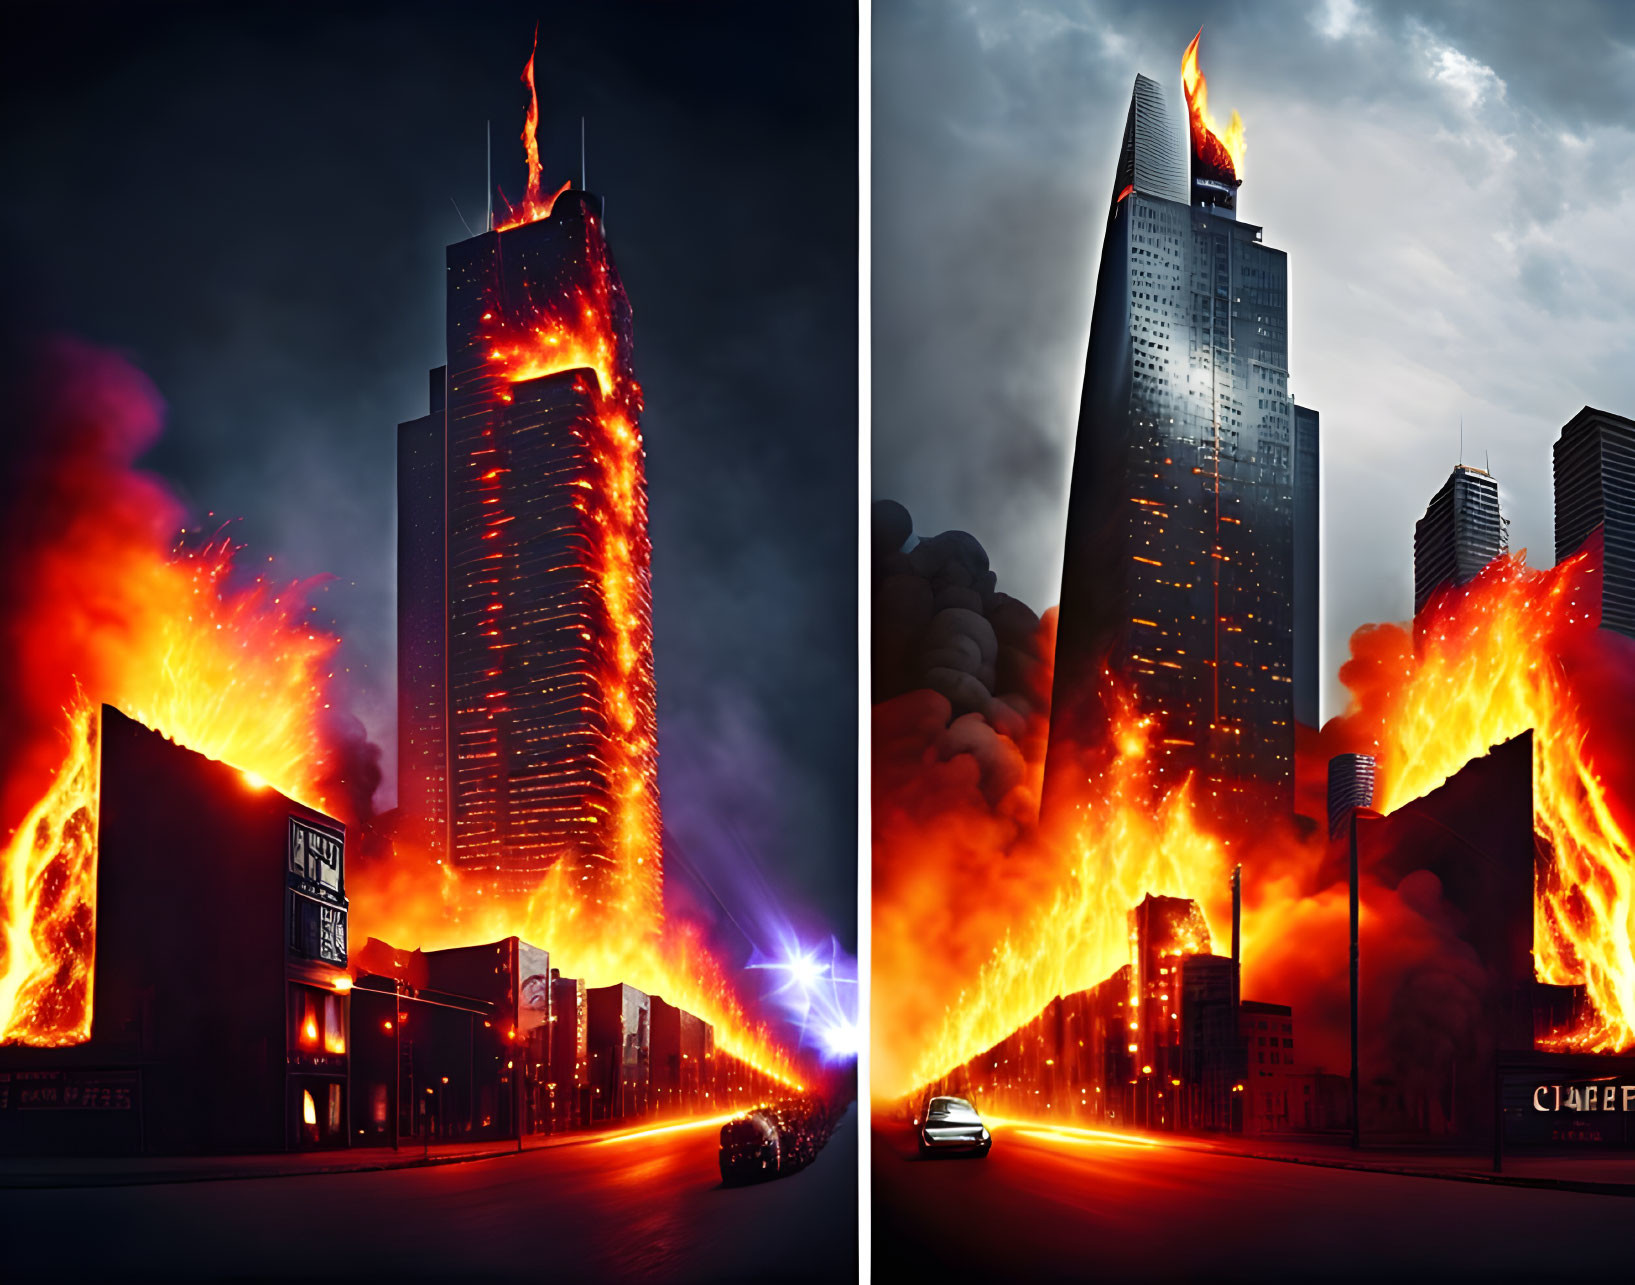 Dramatic night scene of skyscrapers on fire